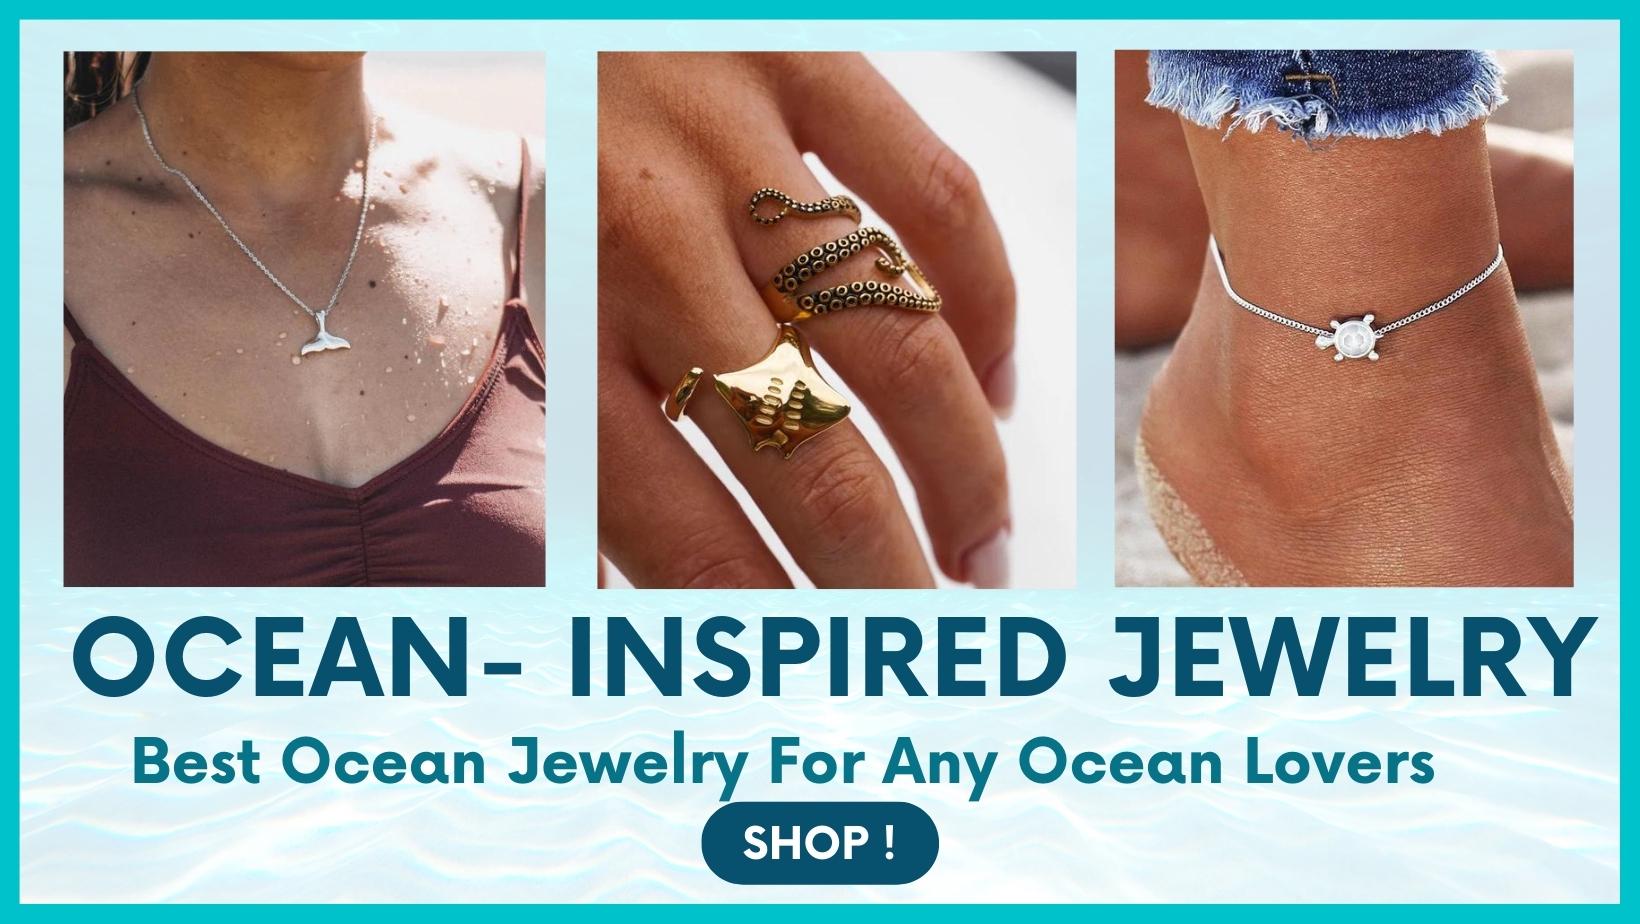 Cool sea animals - ocean inspired jewelry